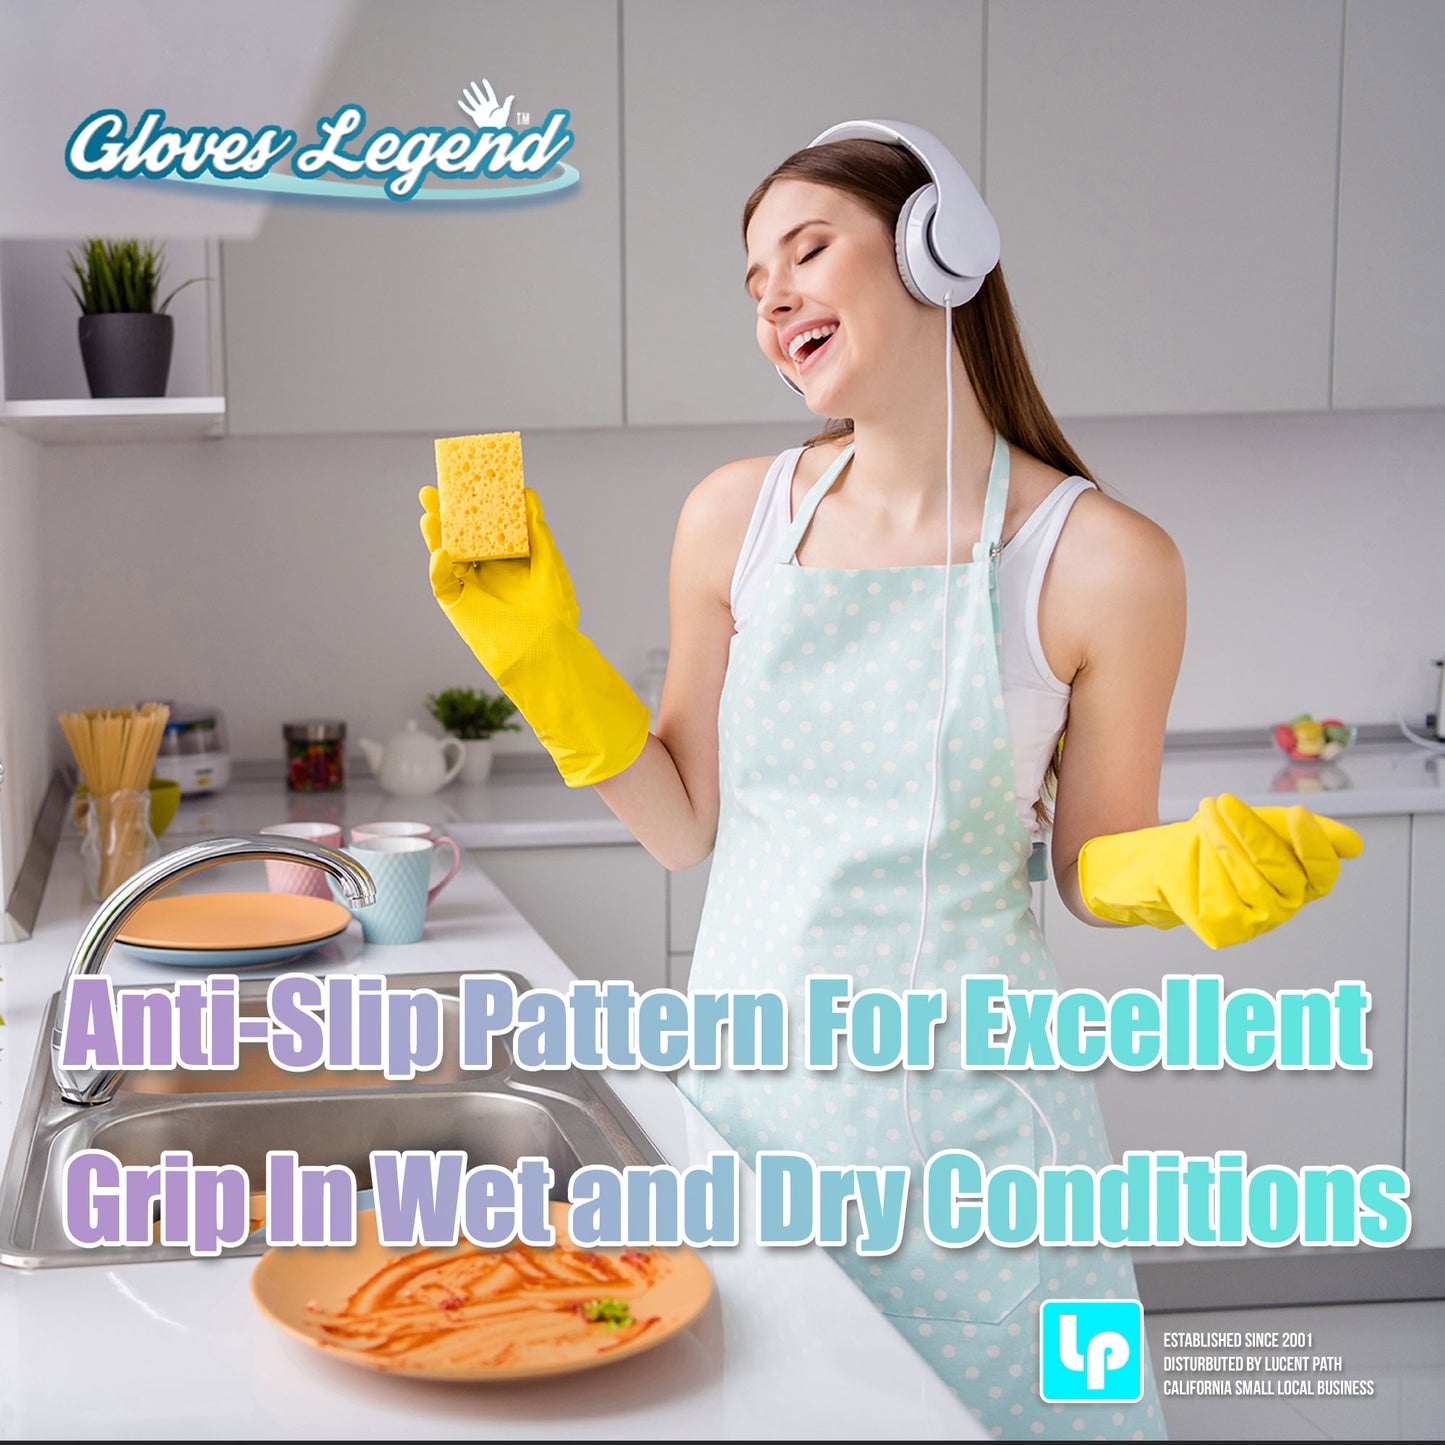 Kitchen Comfort Combo: 3 Pairs Gloves Legend Yellow Nitrile Kitchen Gloves + 1 Pair Gloves Legend White Cotton Gloves